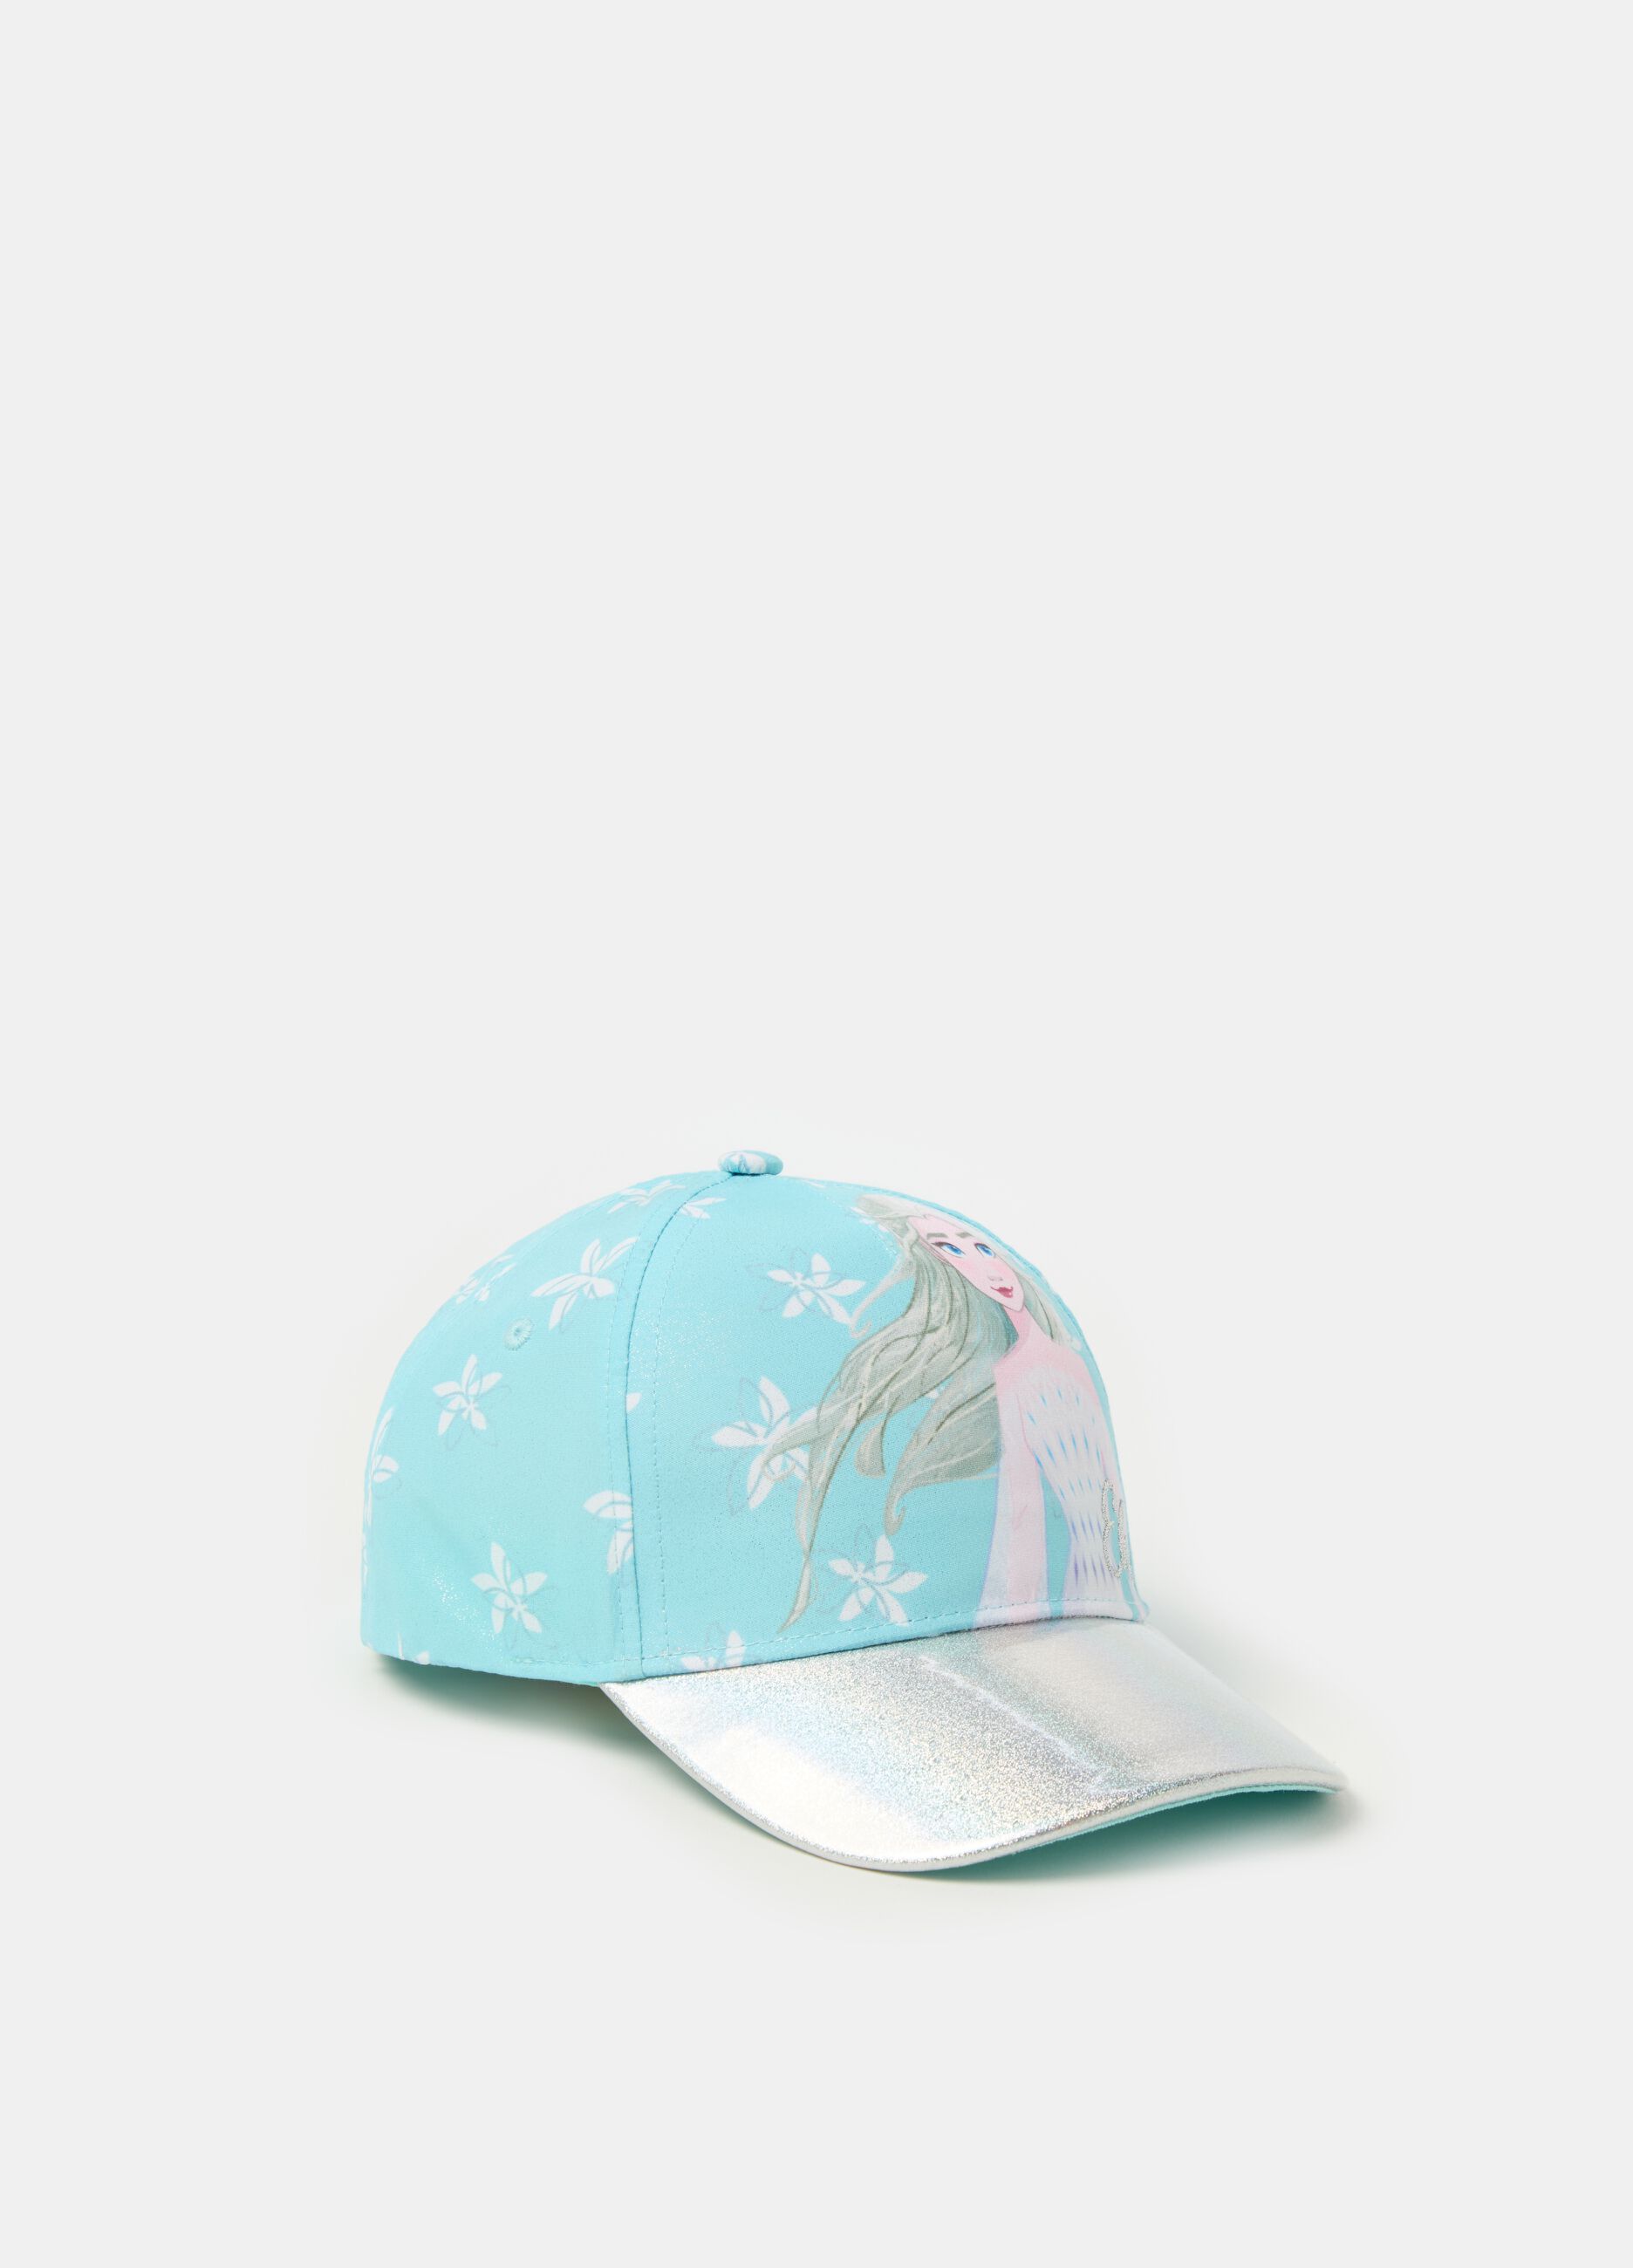 Baseball cap with Frozen print